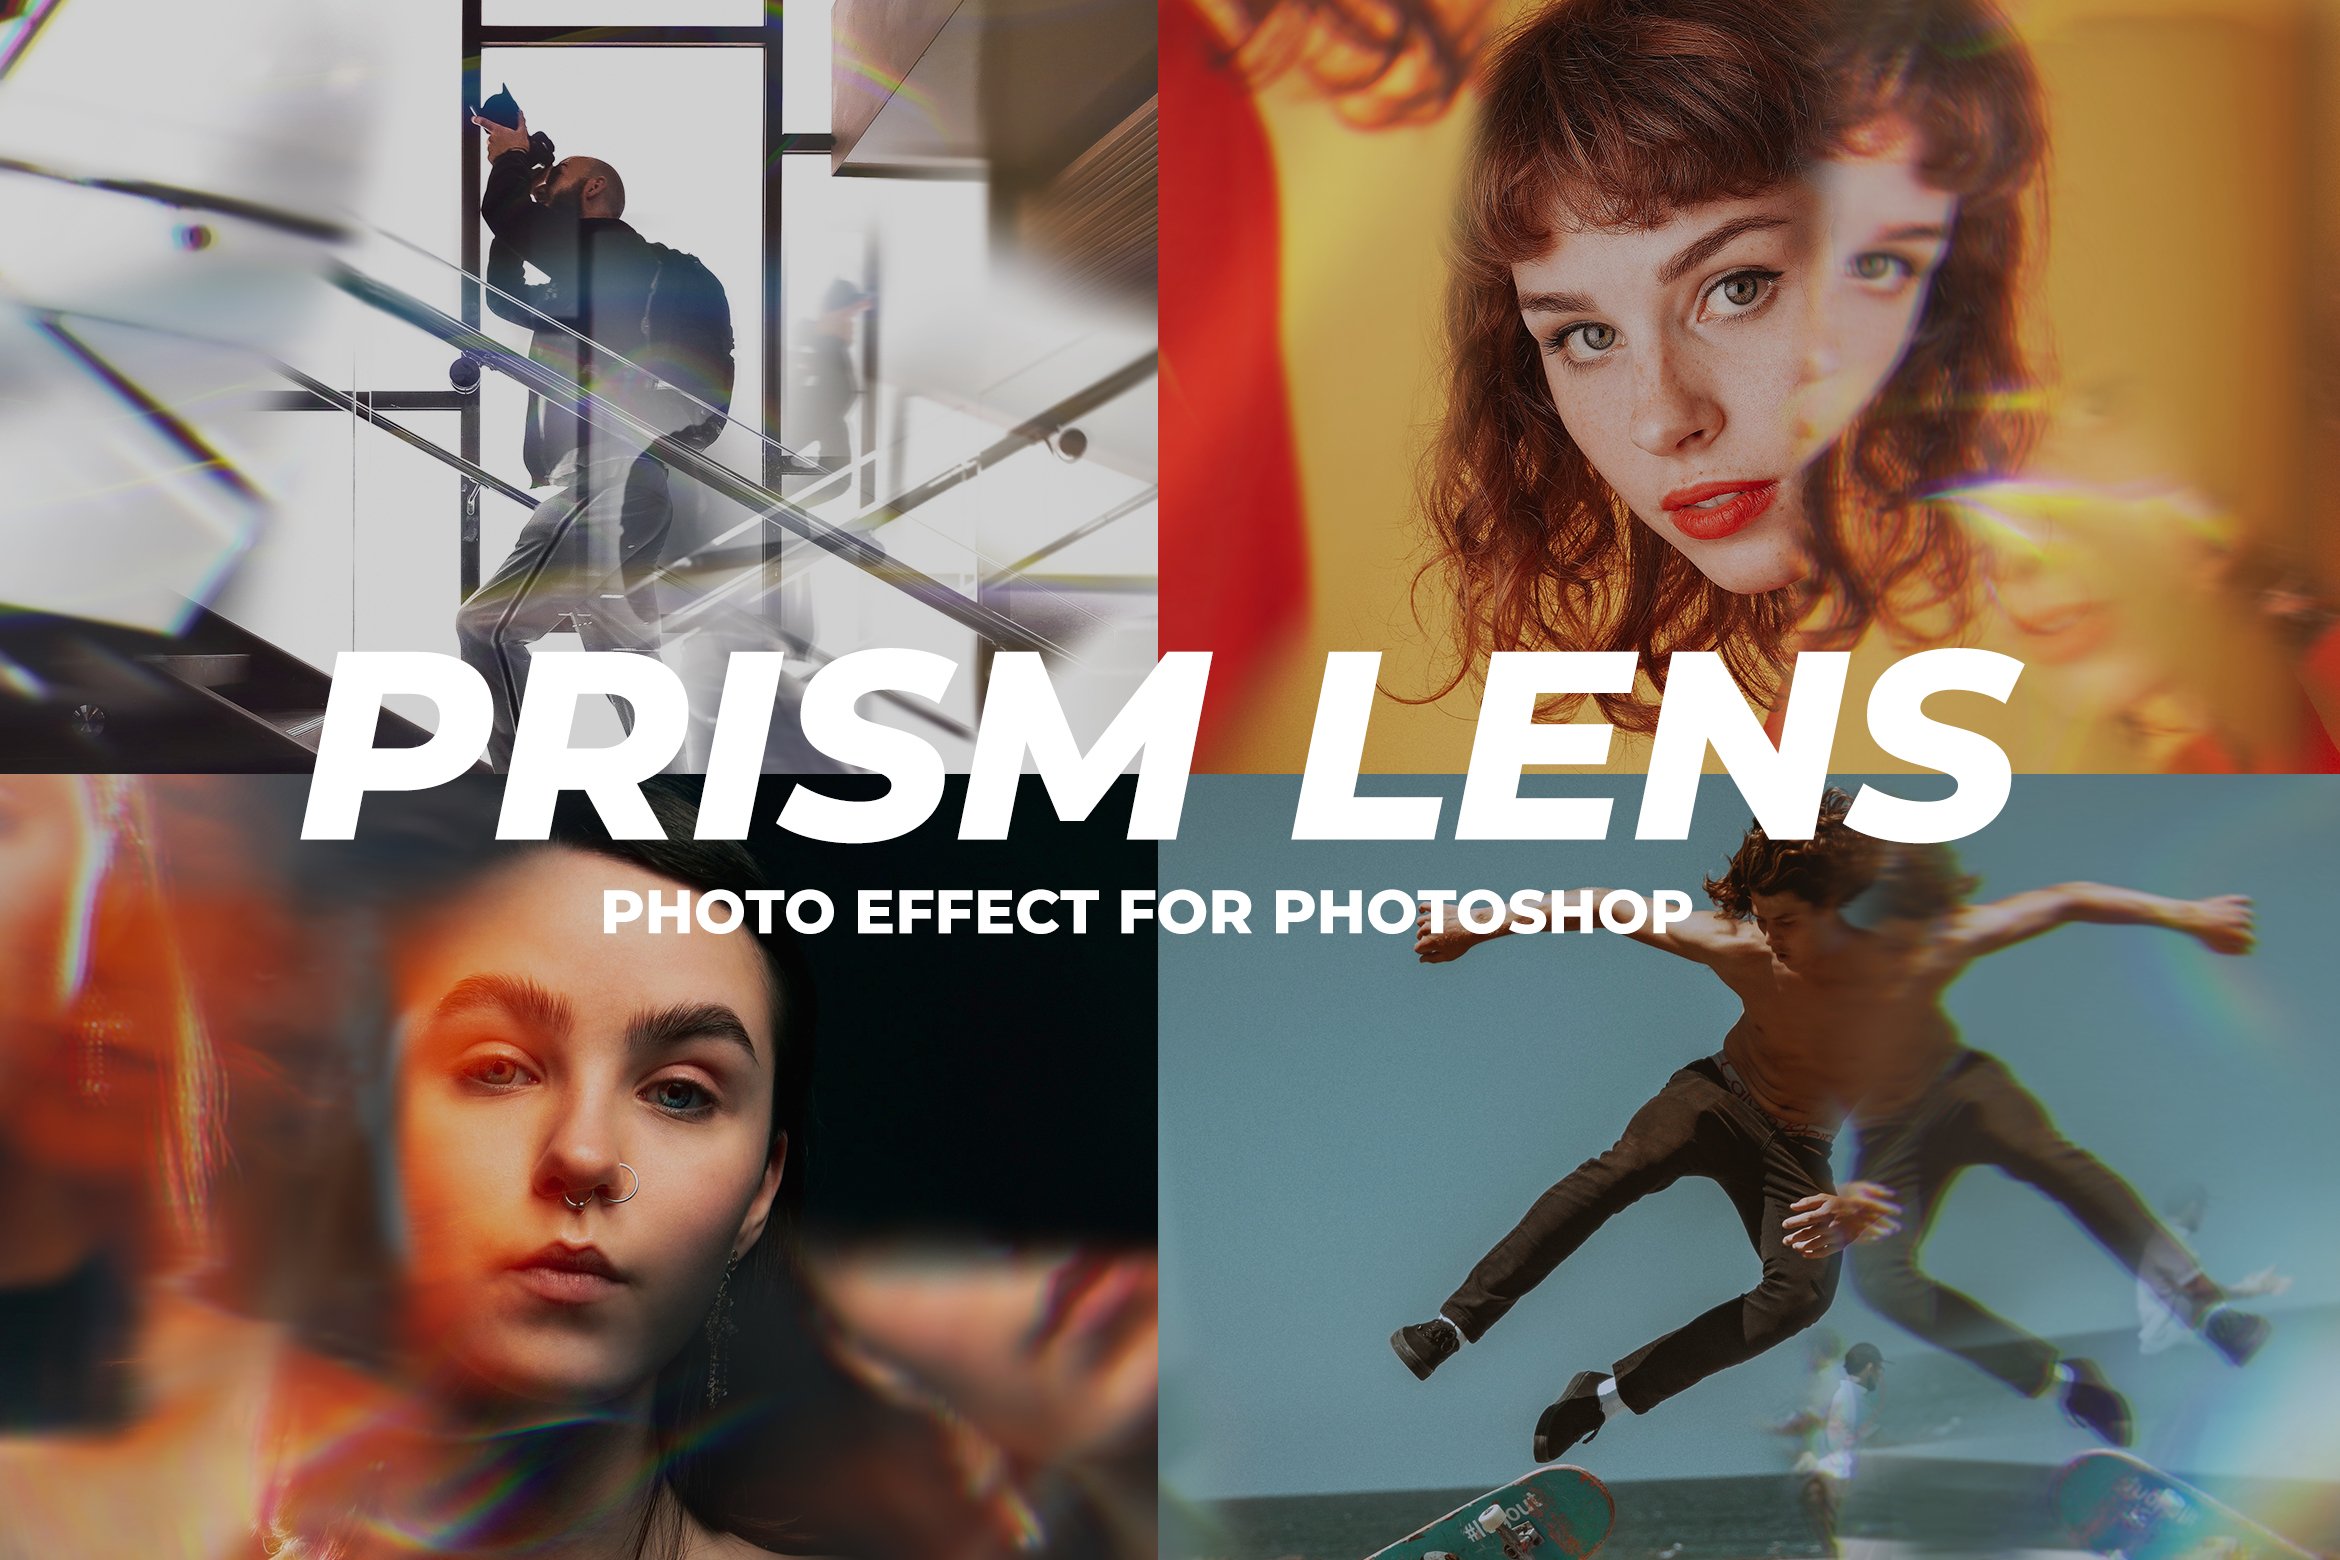 Prism Lens Photoshop Effectcover image.